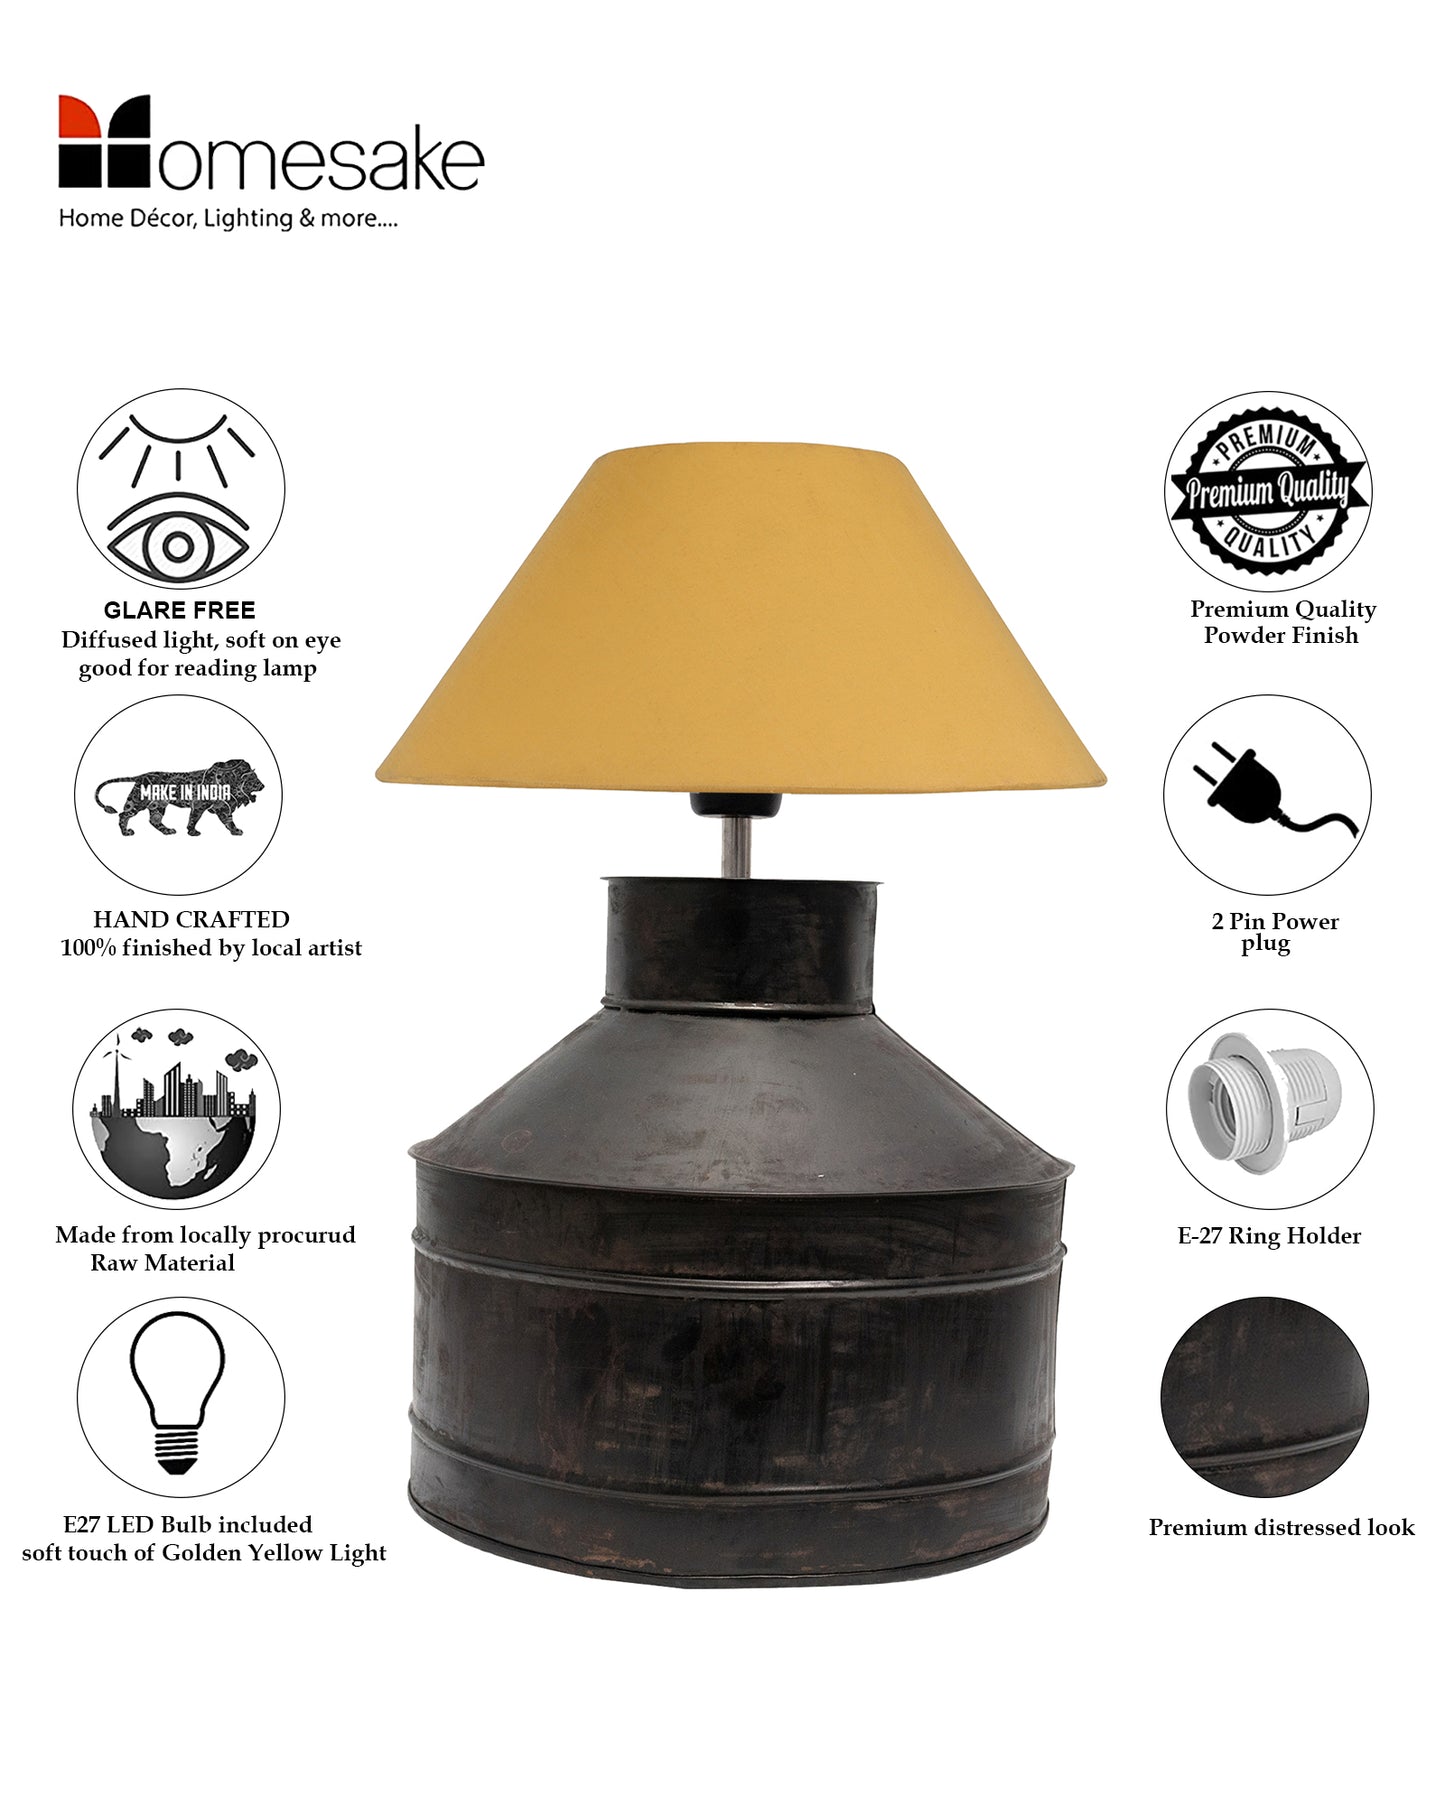 Rustic Milk Gagar Table Lamp with shade, Black Rust Finish